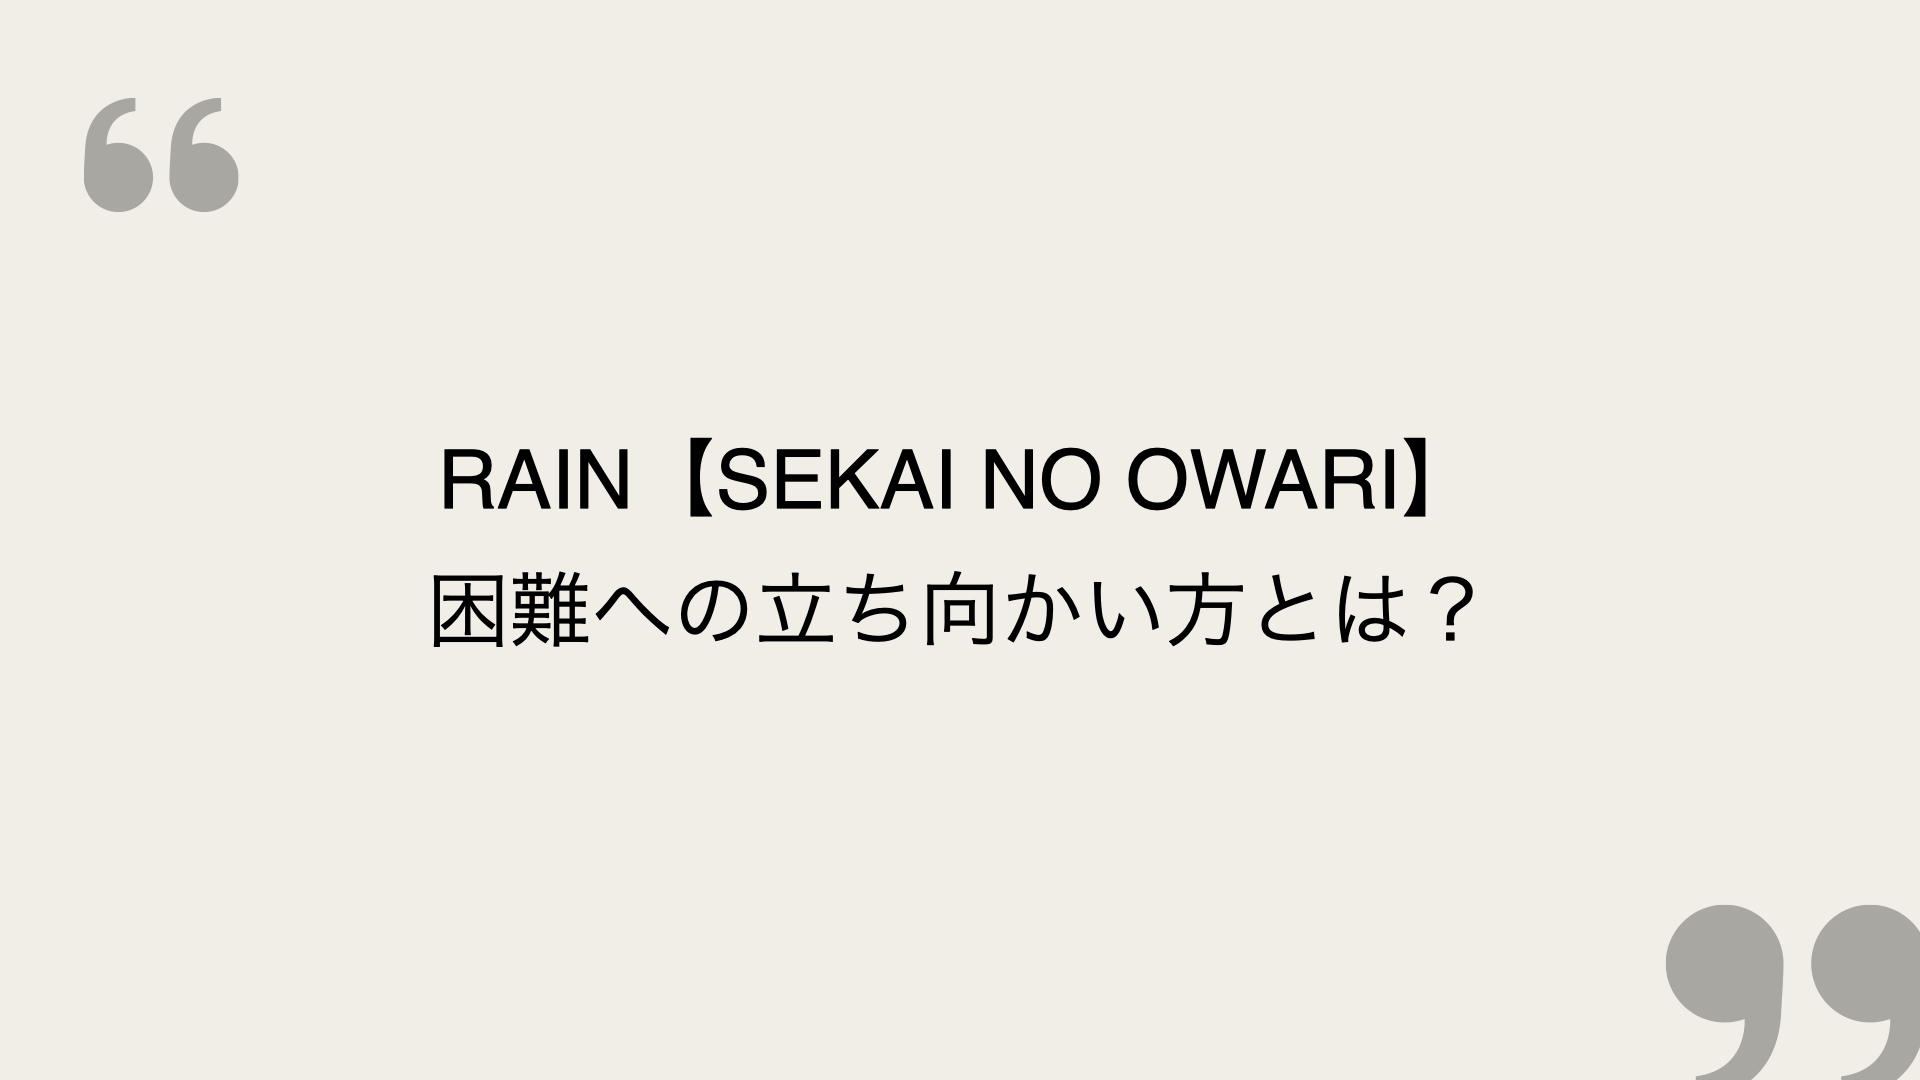 Rain Sekai No Owari 歌詞の意味を考察 困難への立ち向かい方とは Framu Media